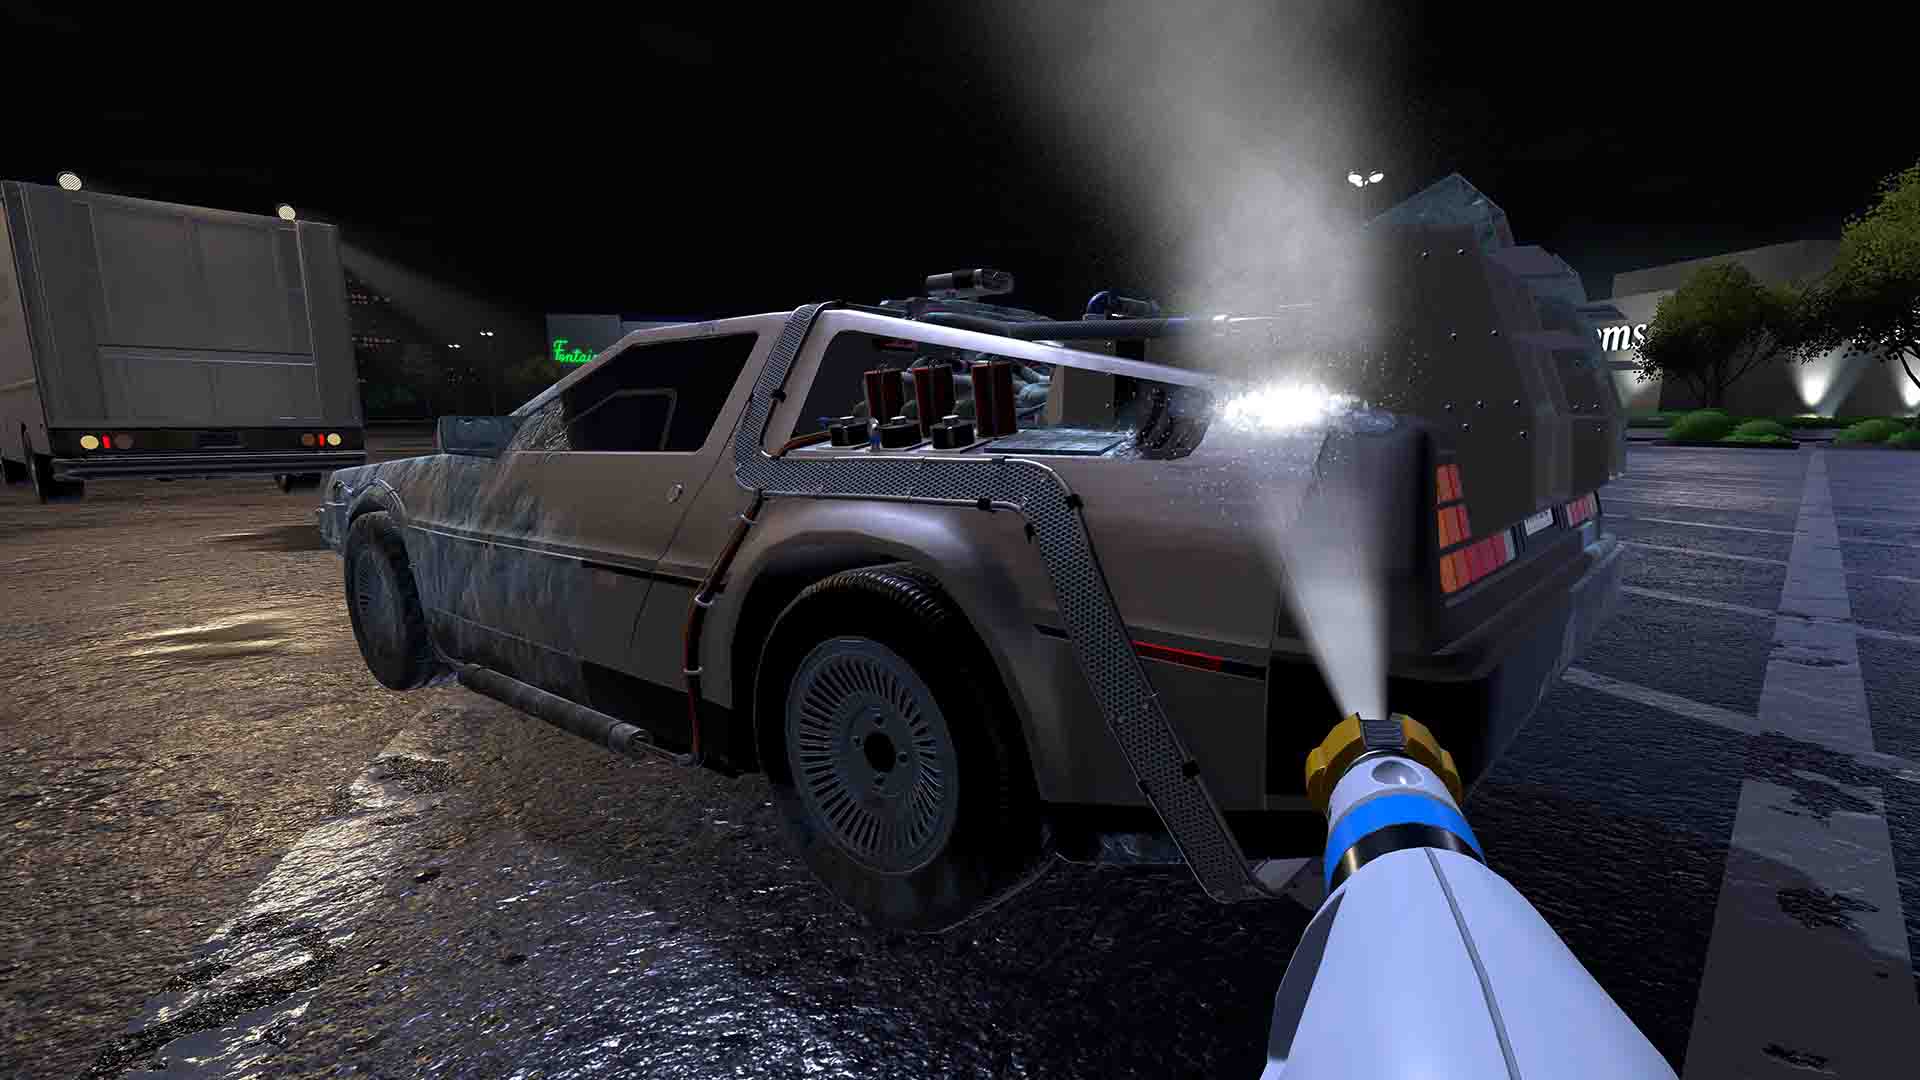 PowerWash Simulator VR - Official Trailer